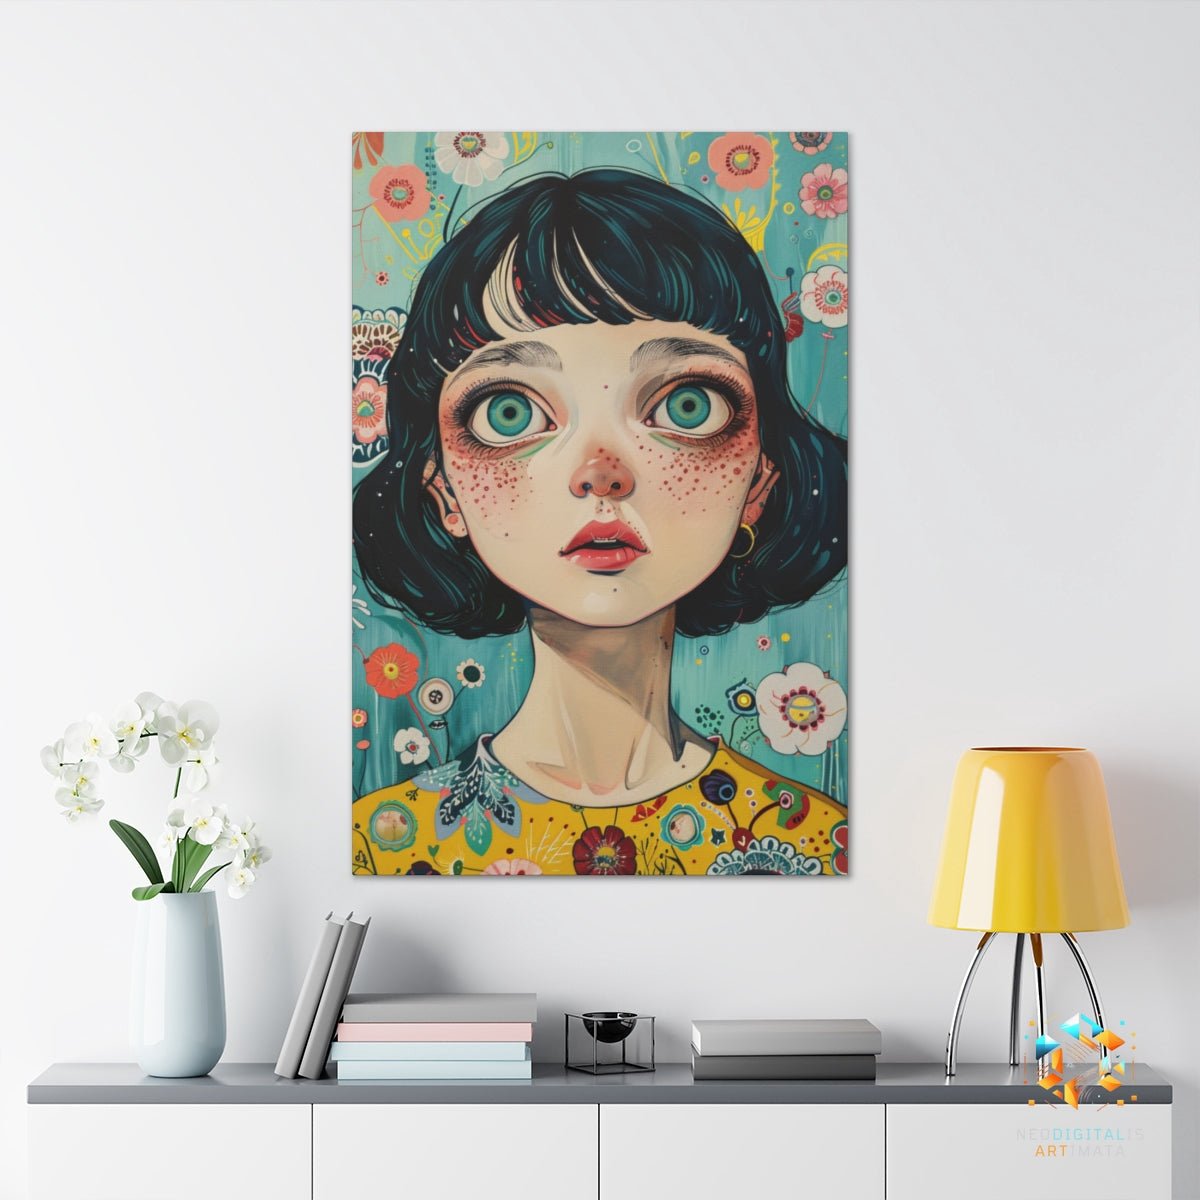 Enchanted Bloom Stare - Original Pop Surrealism Style Portrait Wall Art - NeoDIGITALis ARTimata